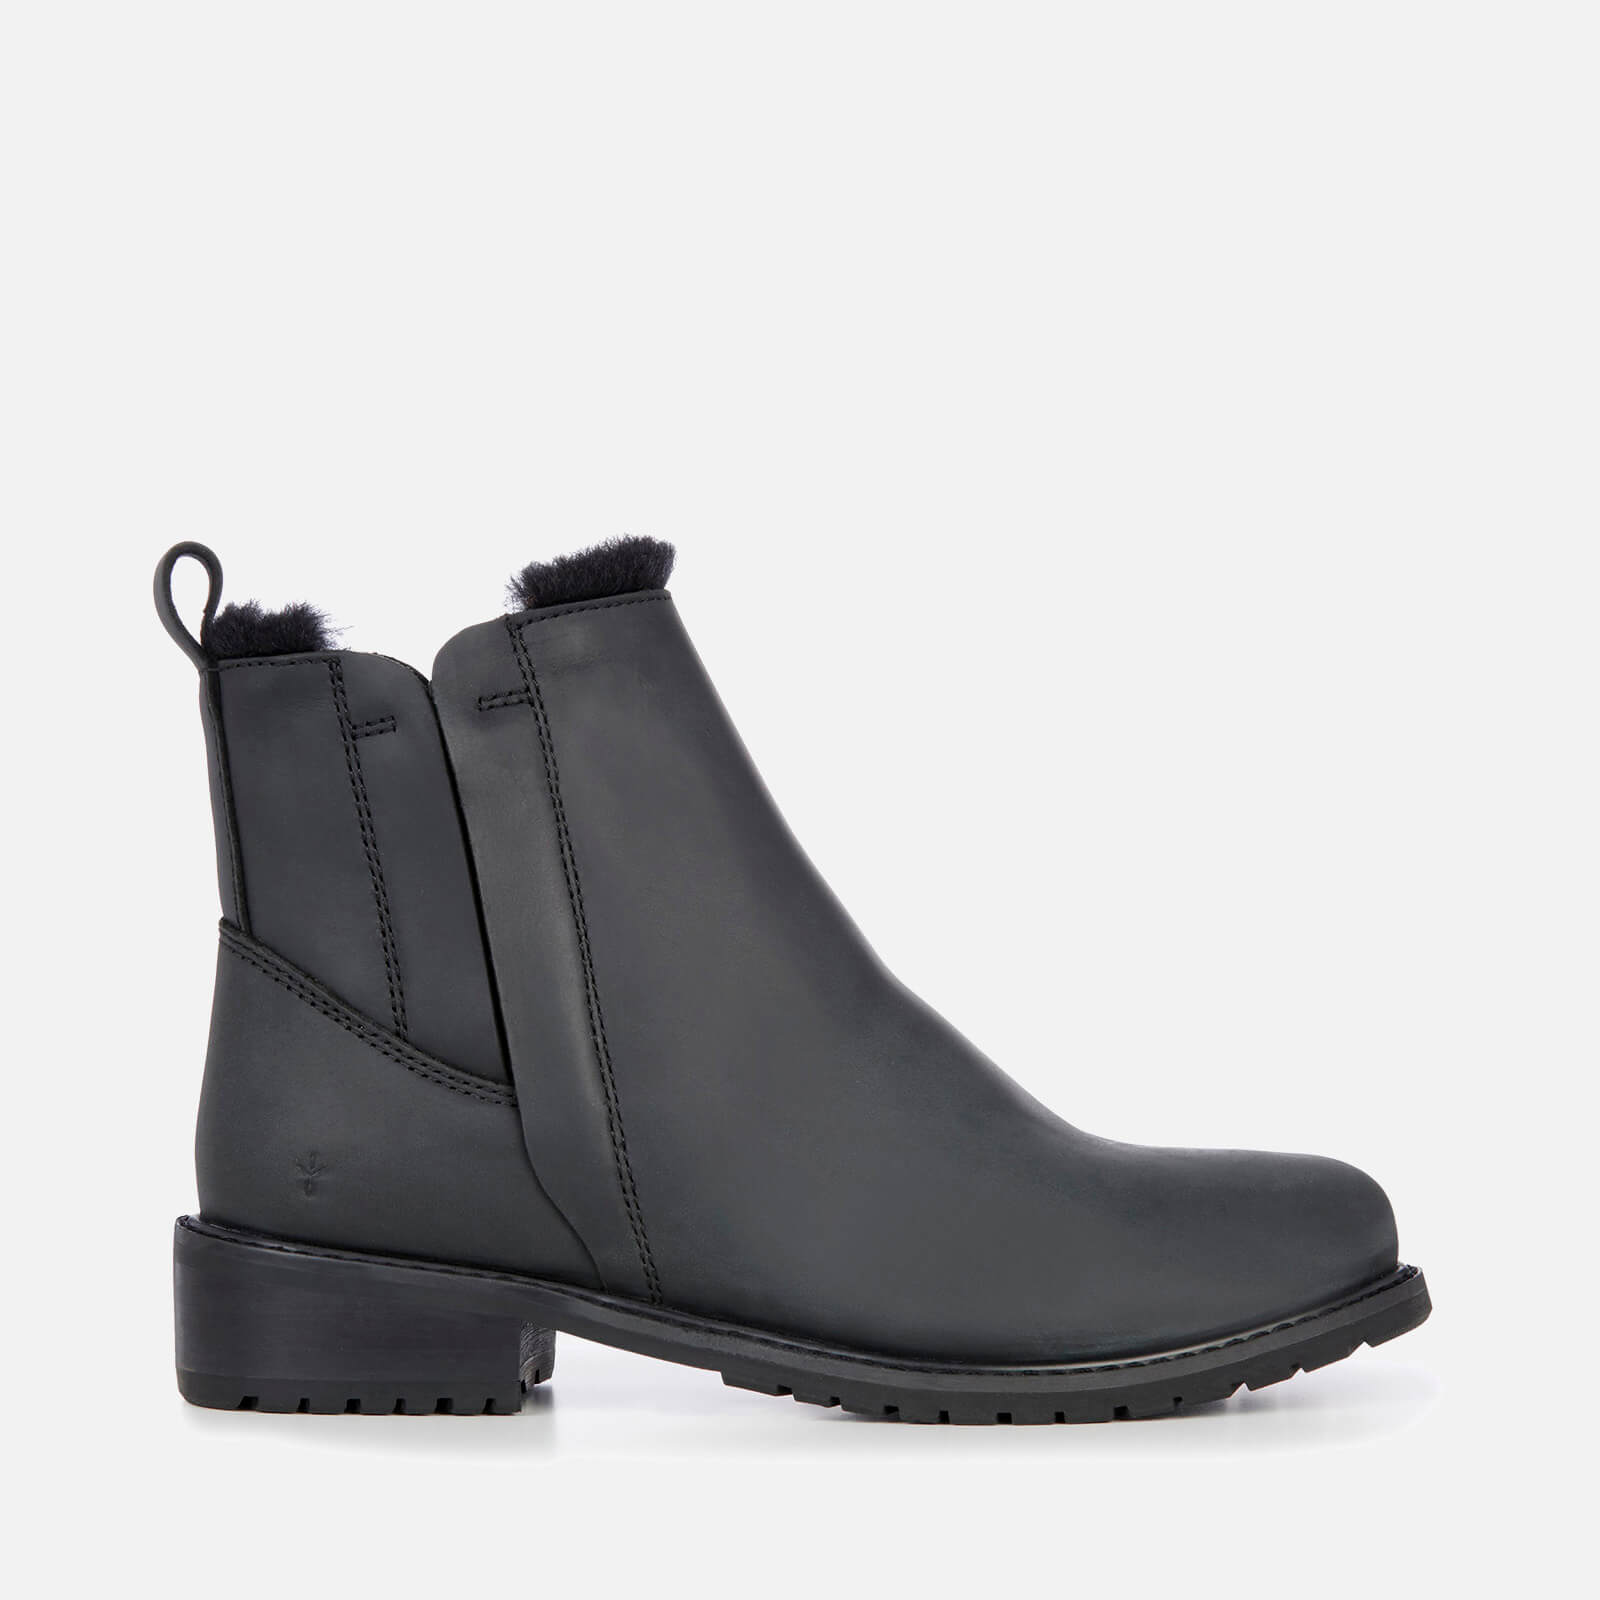 EMU Australia Women’s Pioneer Leather Ankle Boots - Black